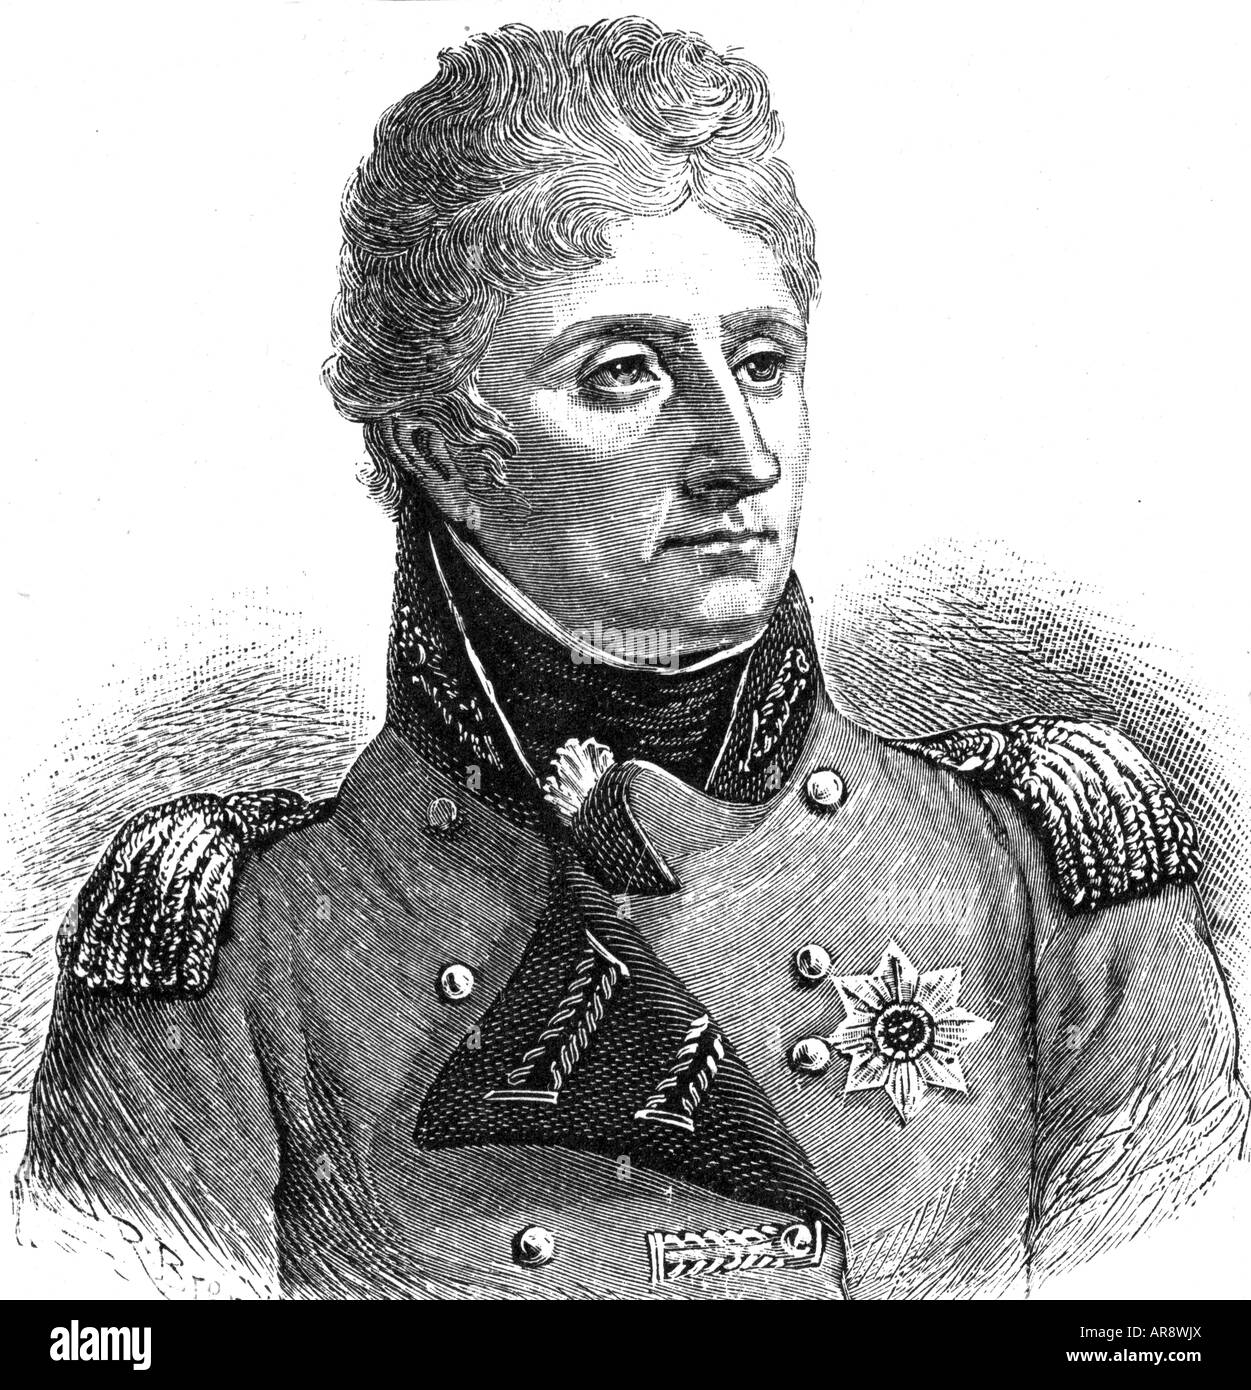 Moore, John, 13.11.1761 - 16.1.1809, British General, portrait, engraving, 19th century, Stock Photo